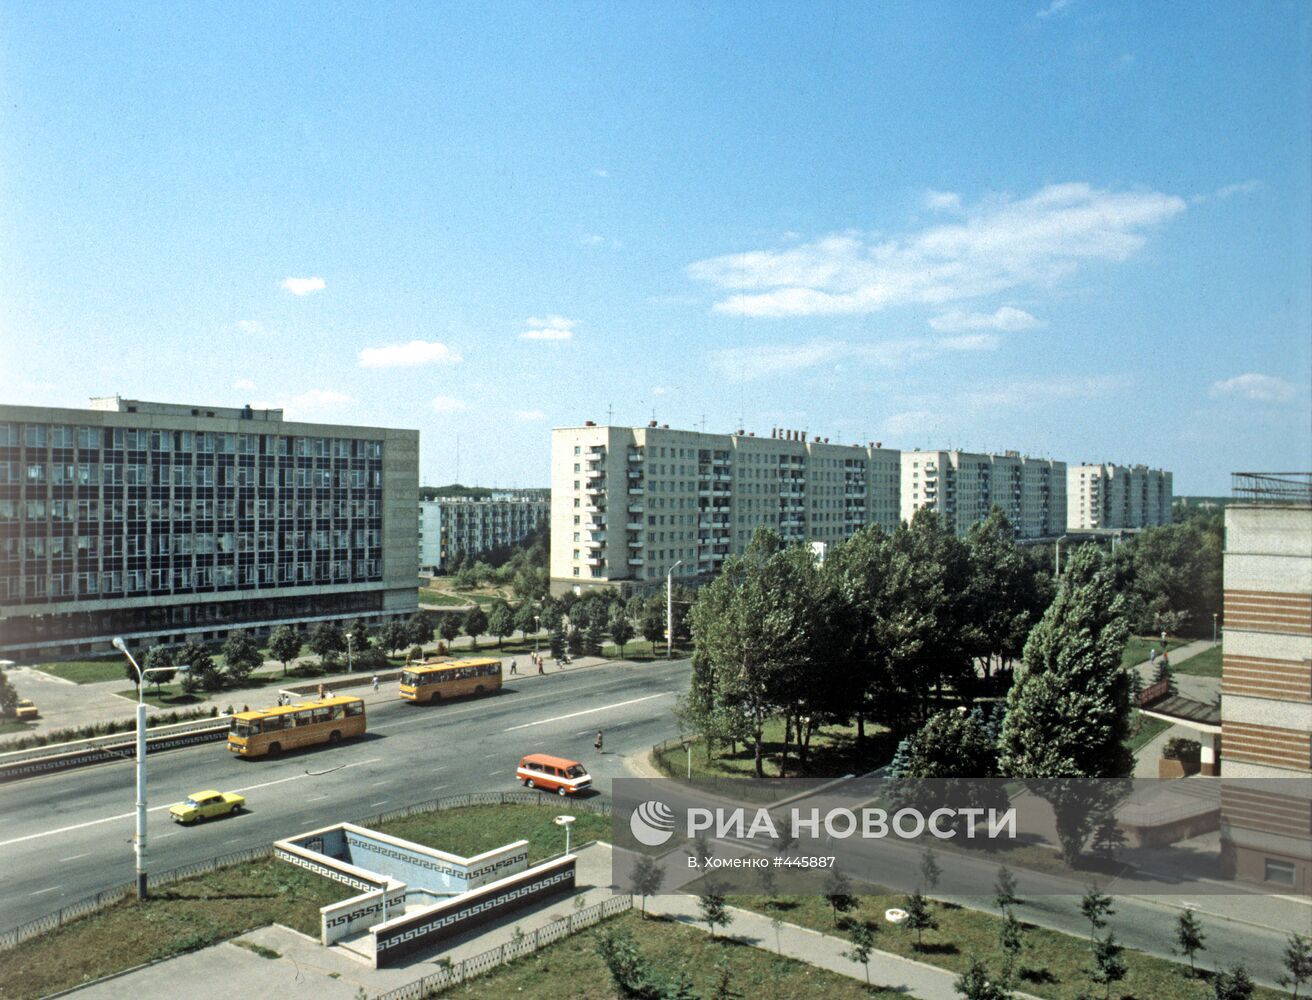 Центр города Ставрополя